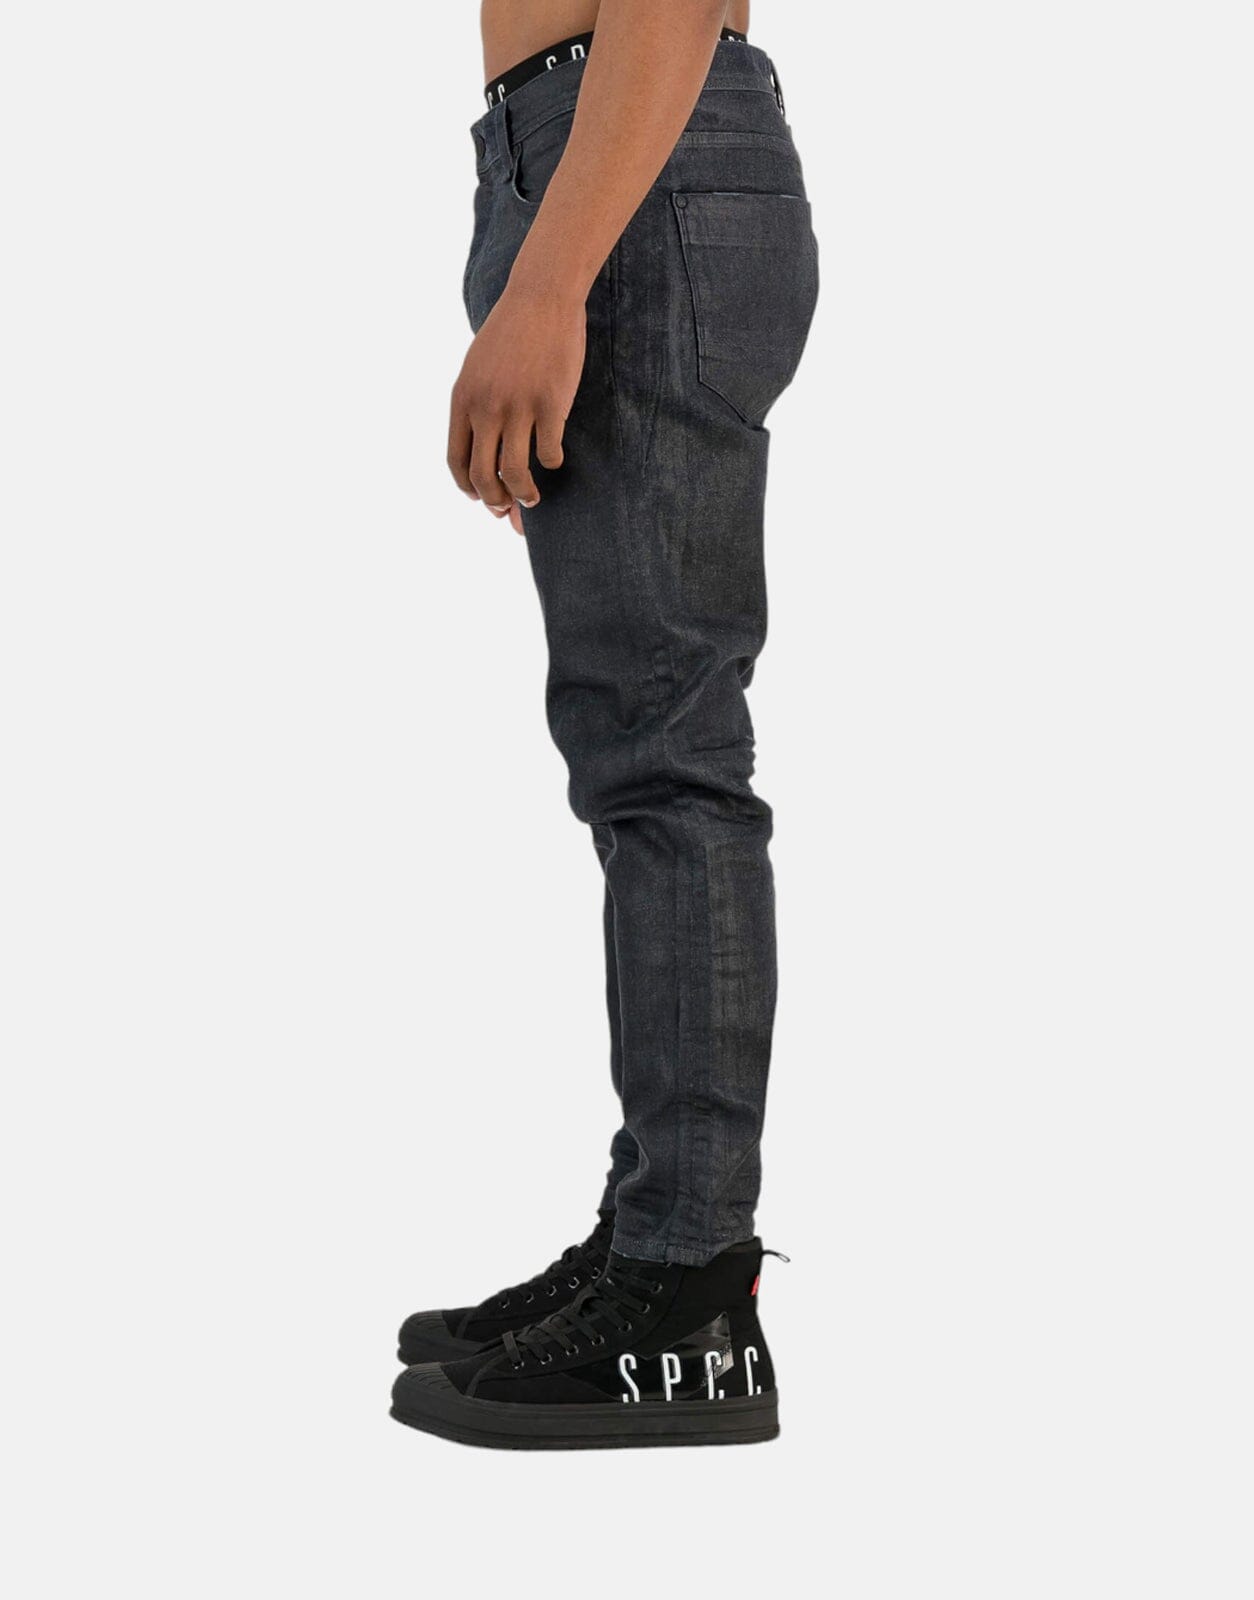 SPCC Proxima Jeans - Subwear